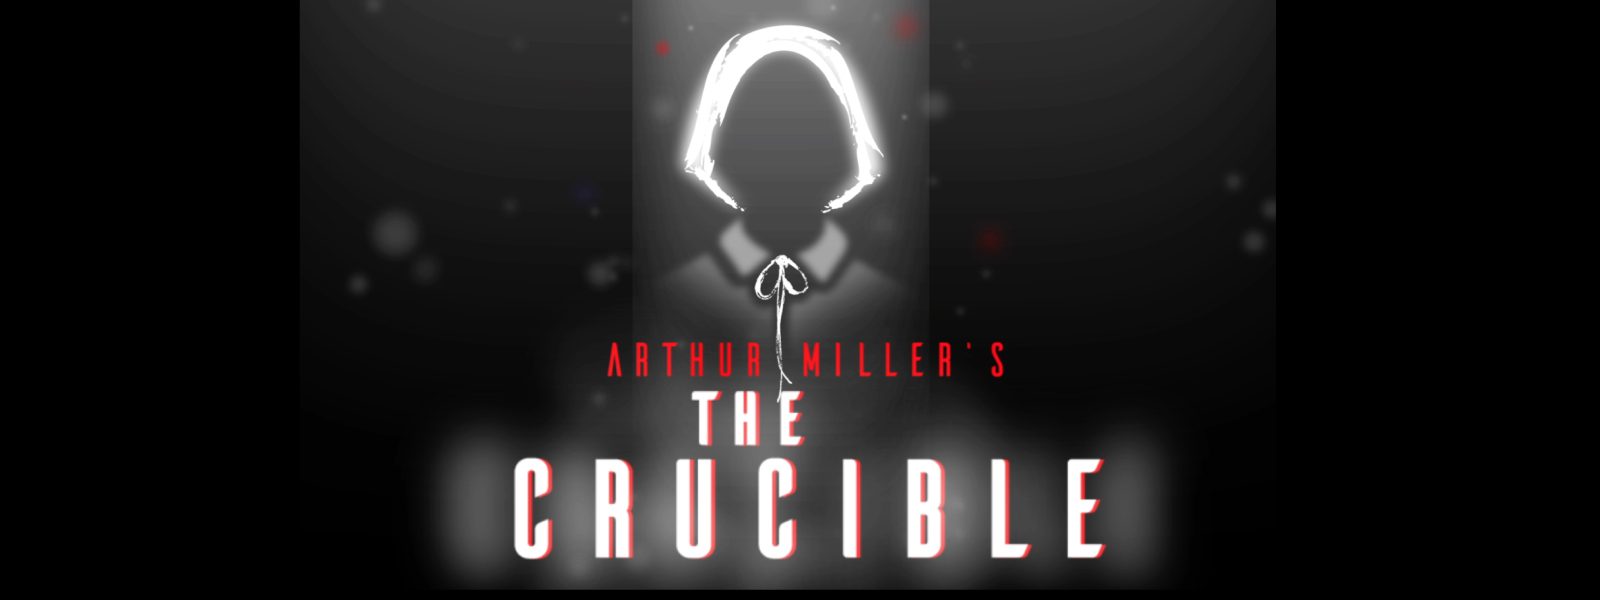 The Crucible 1600x600.jpg